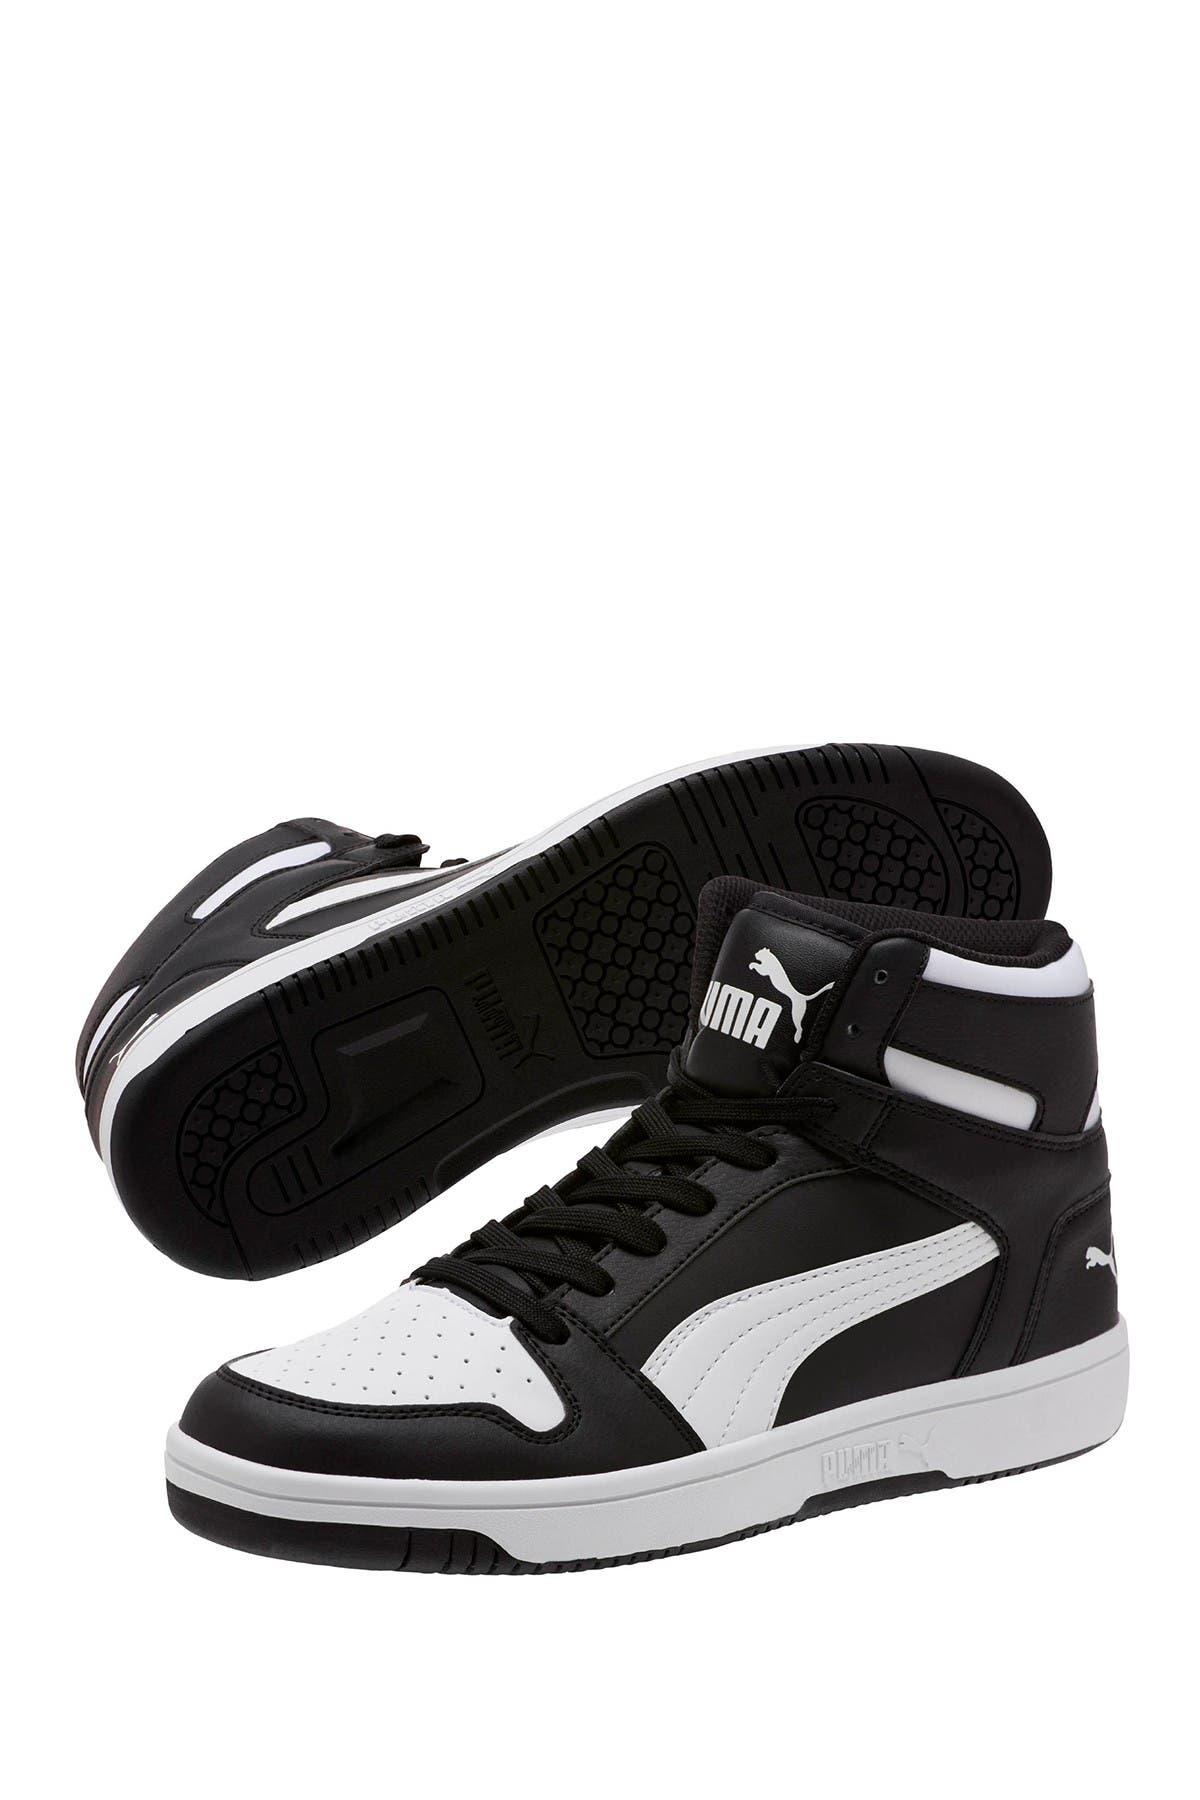 PUMA Rebound Layup Sneakers in Black/White (Black) for Men - Save 56% - Lyst